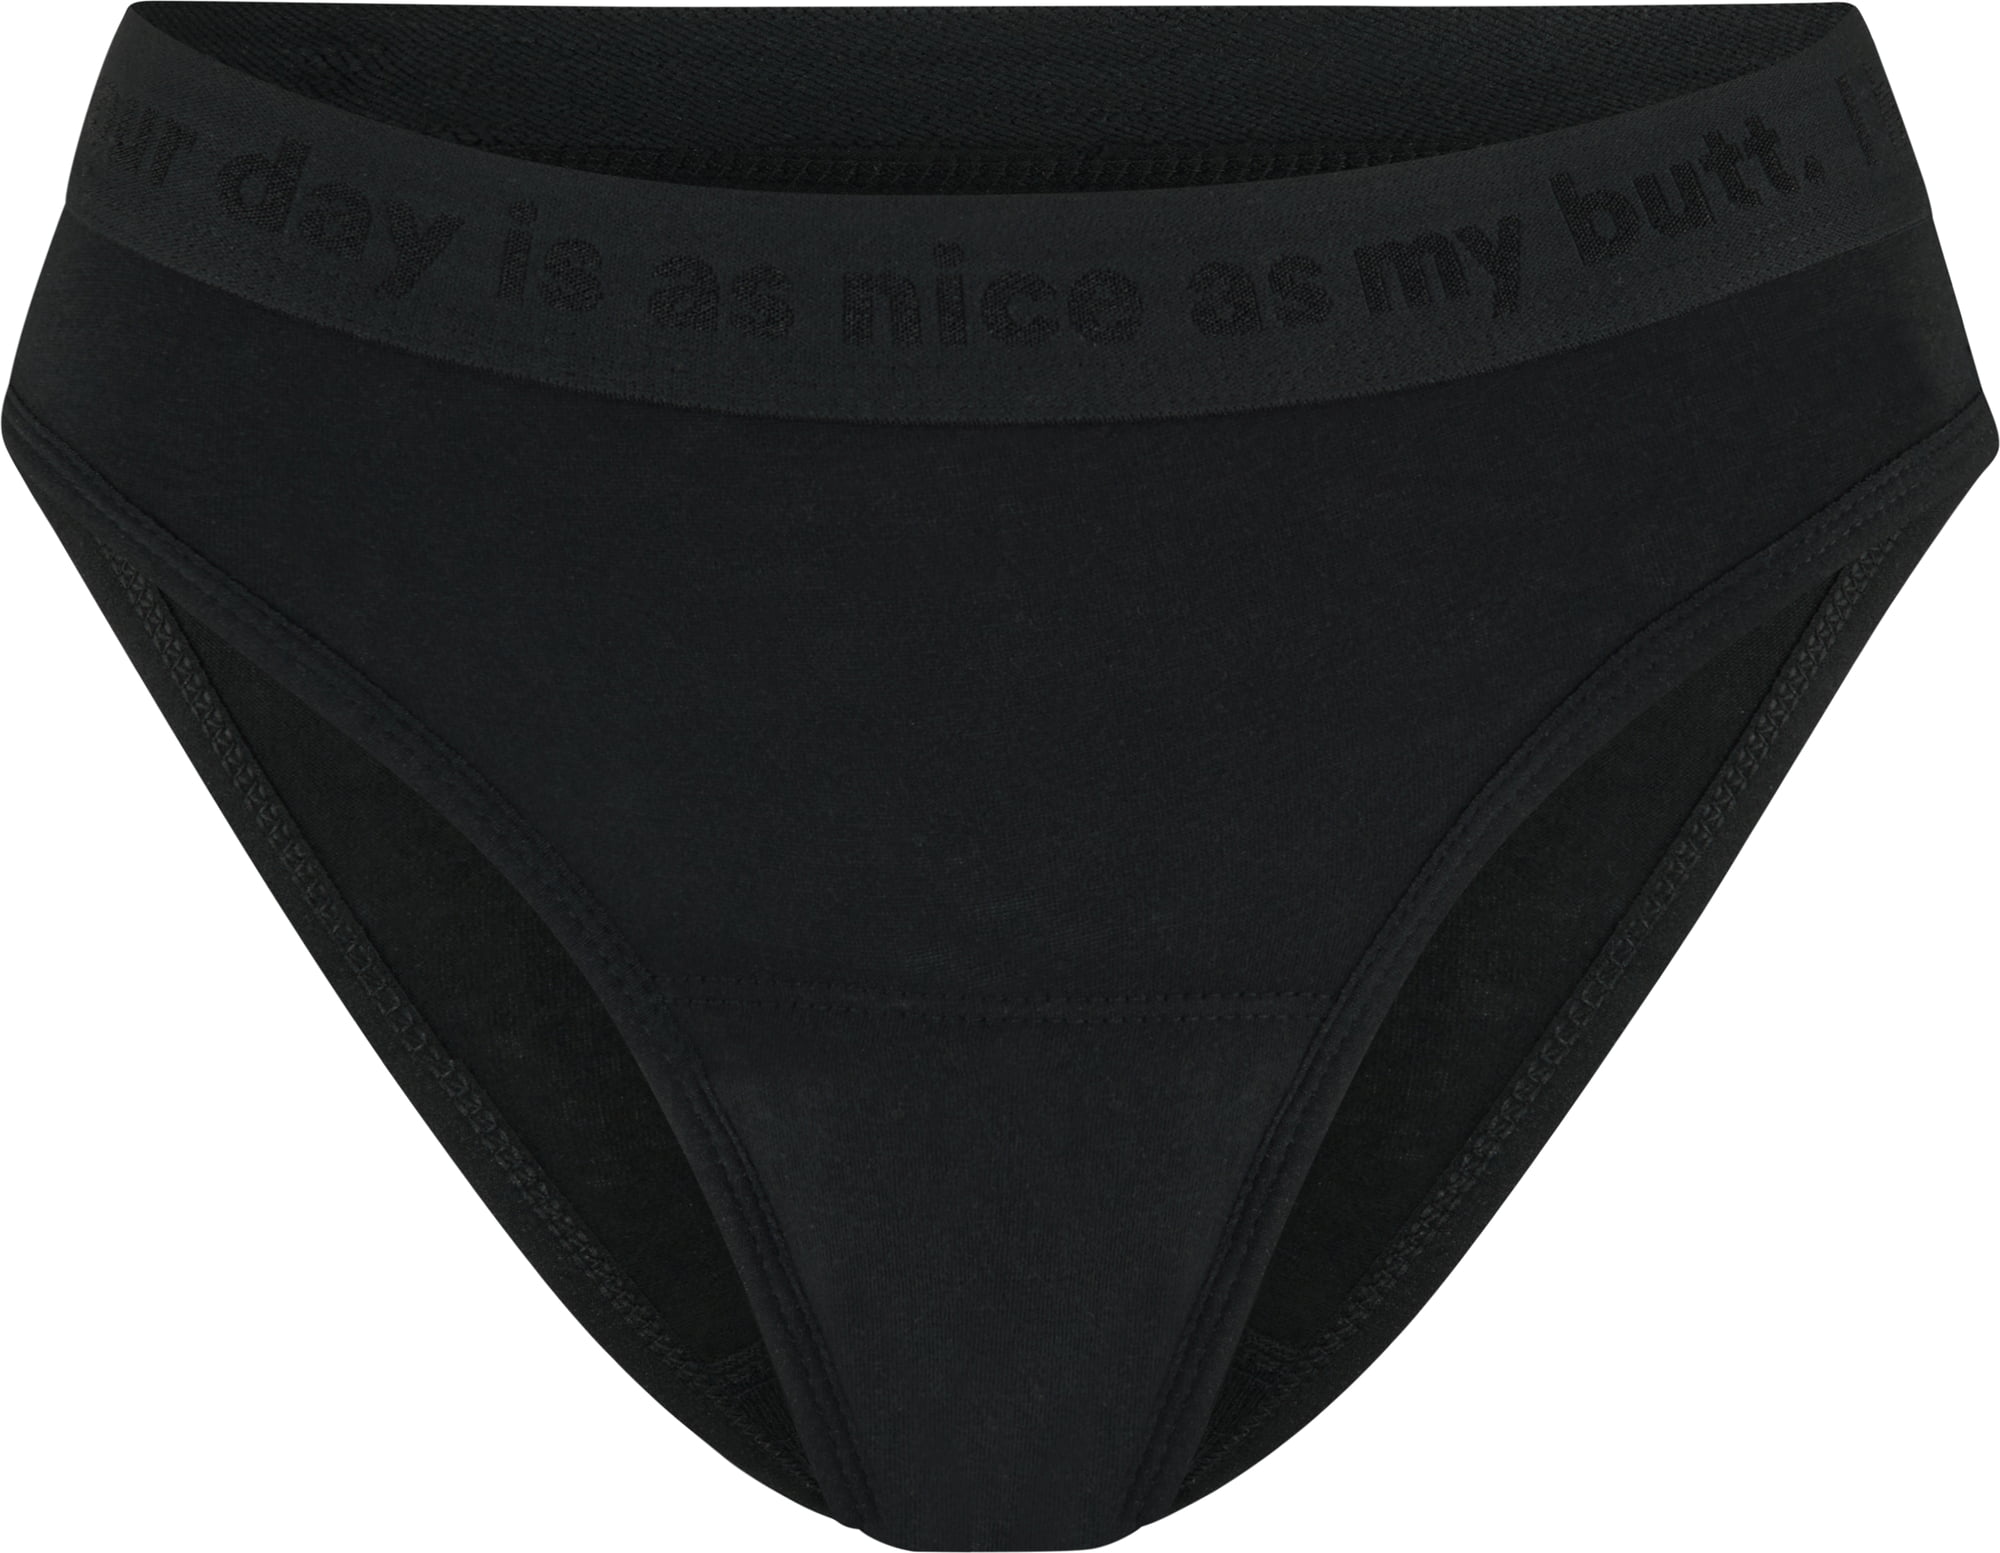 Eco-Style Women's Underwear for Sale Online